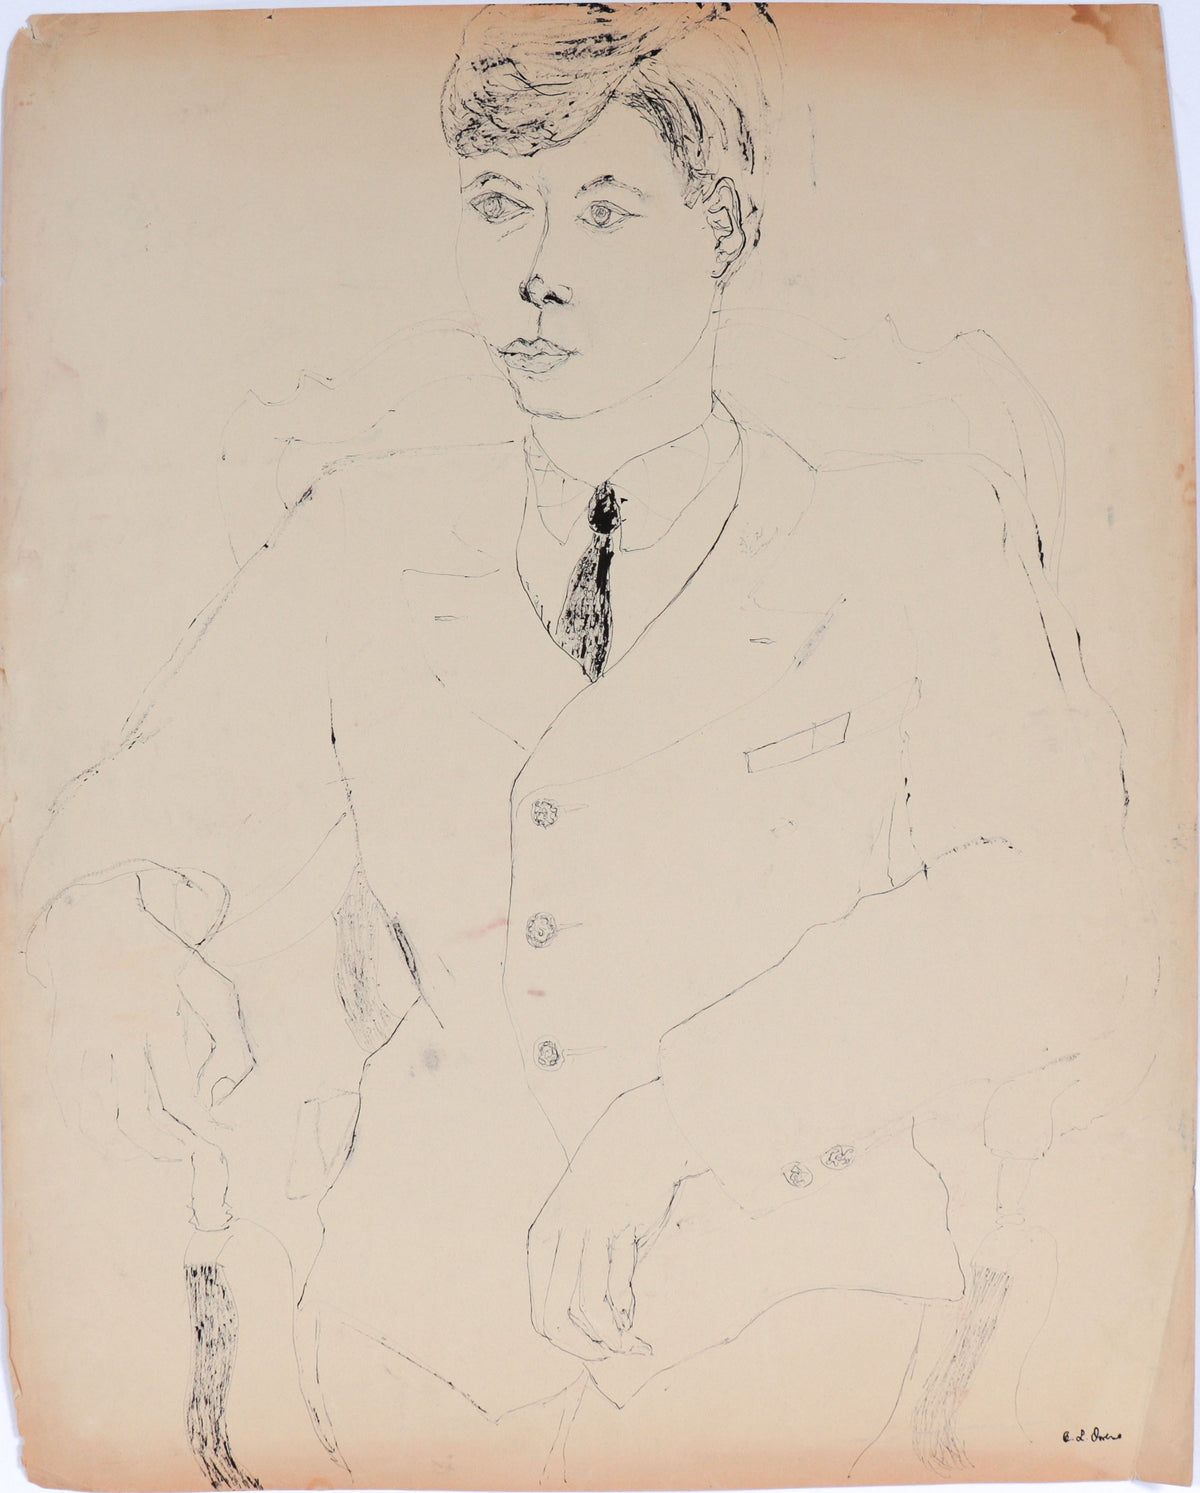 Seated Figure in a Suit&lt;br&gt;1942 Ink&lt;br&gt;&lt;br&gt;#C5011